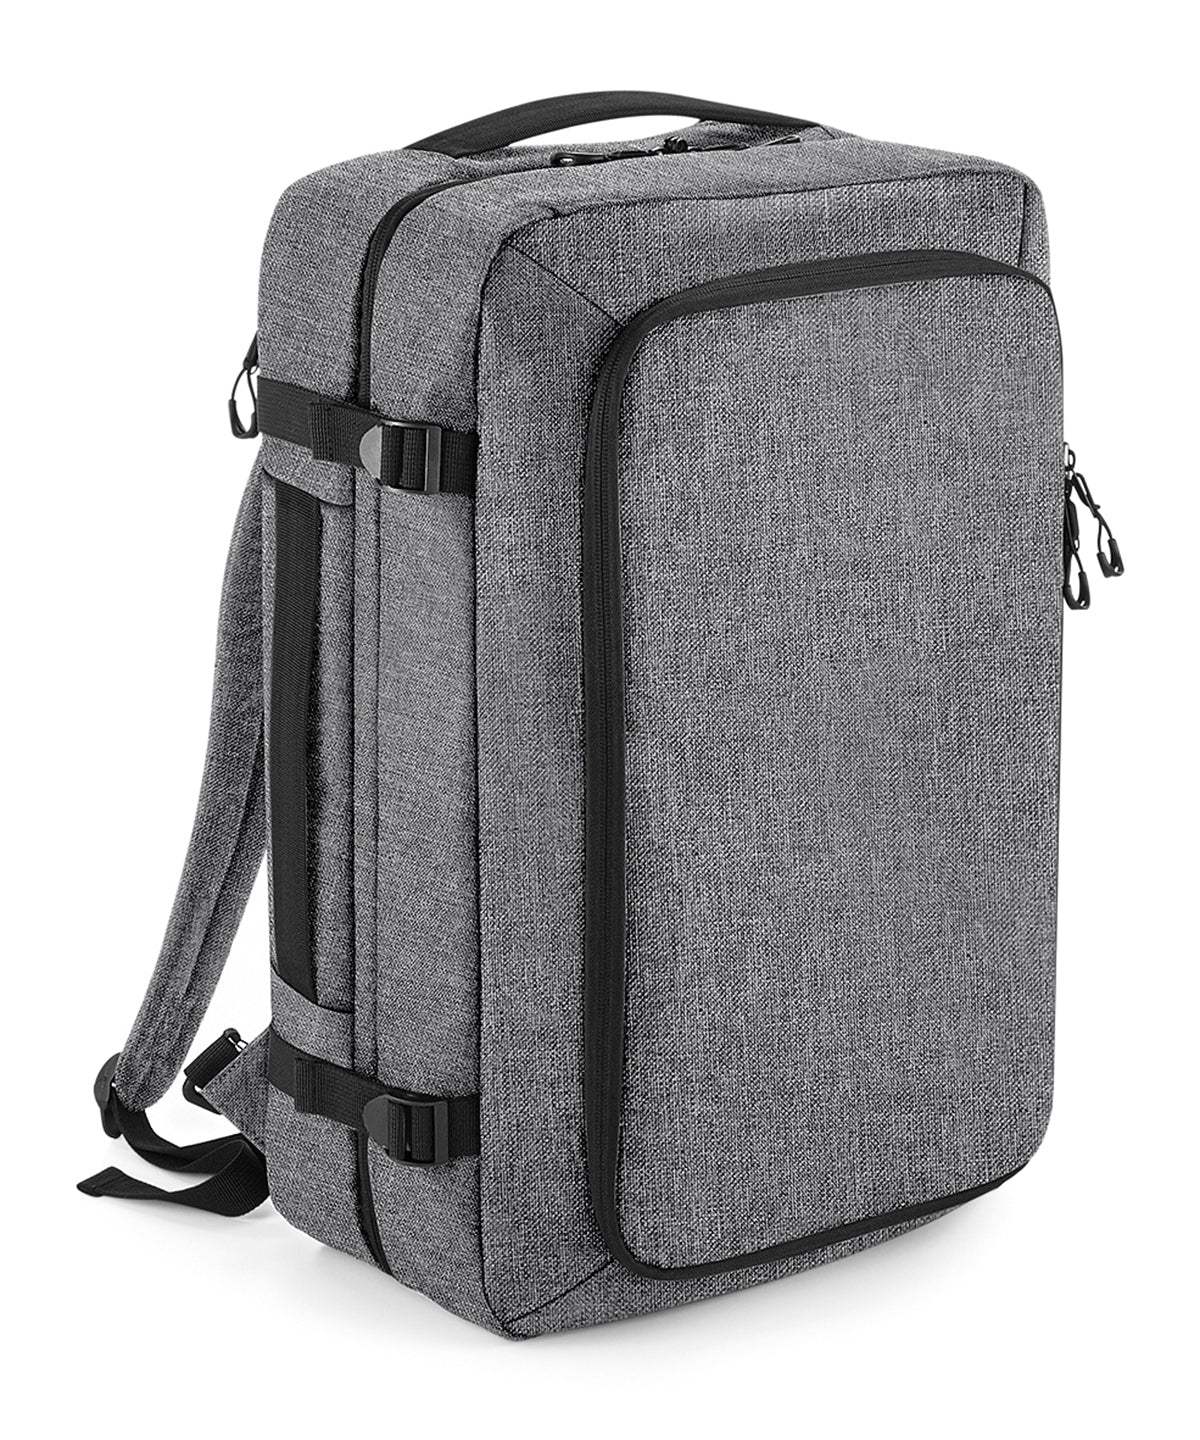 Töskur - Escape Carry-on Backpack